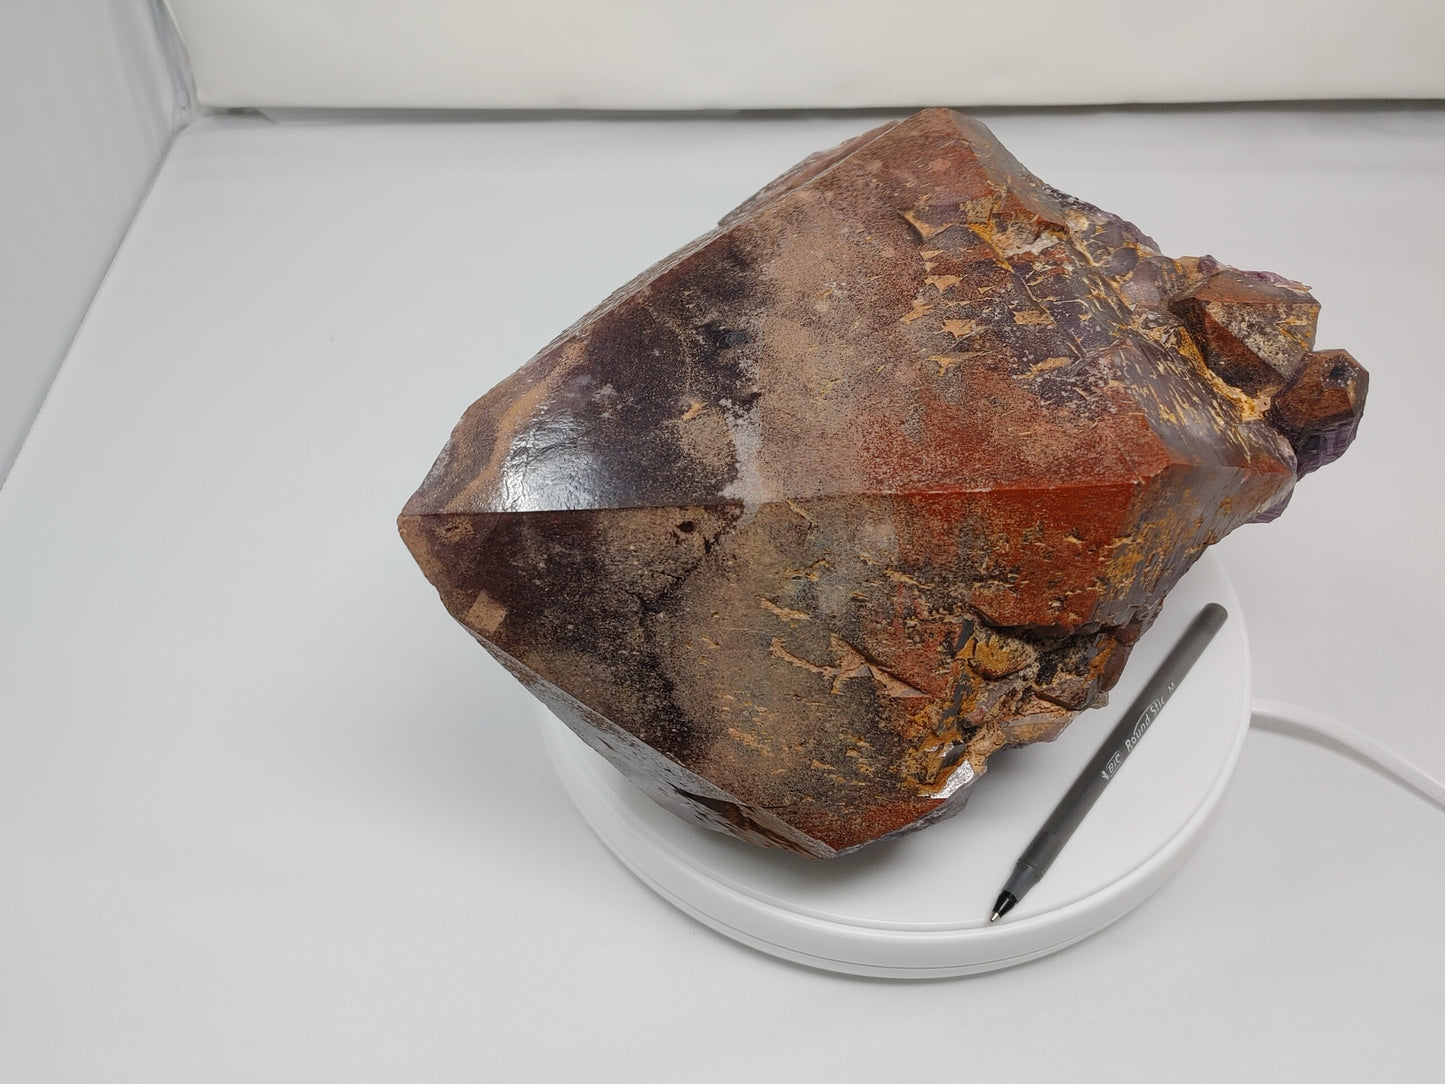 Giant Amethyst Crystal (16" long), Thunder Bay, Ontario, Canada